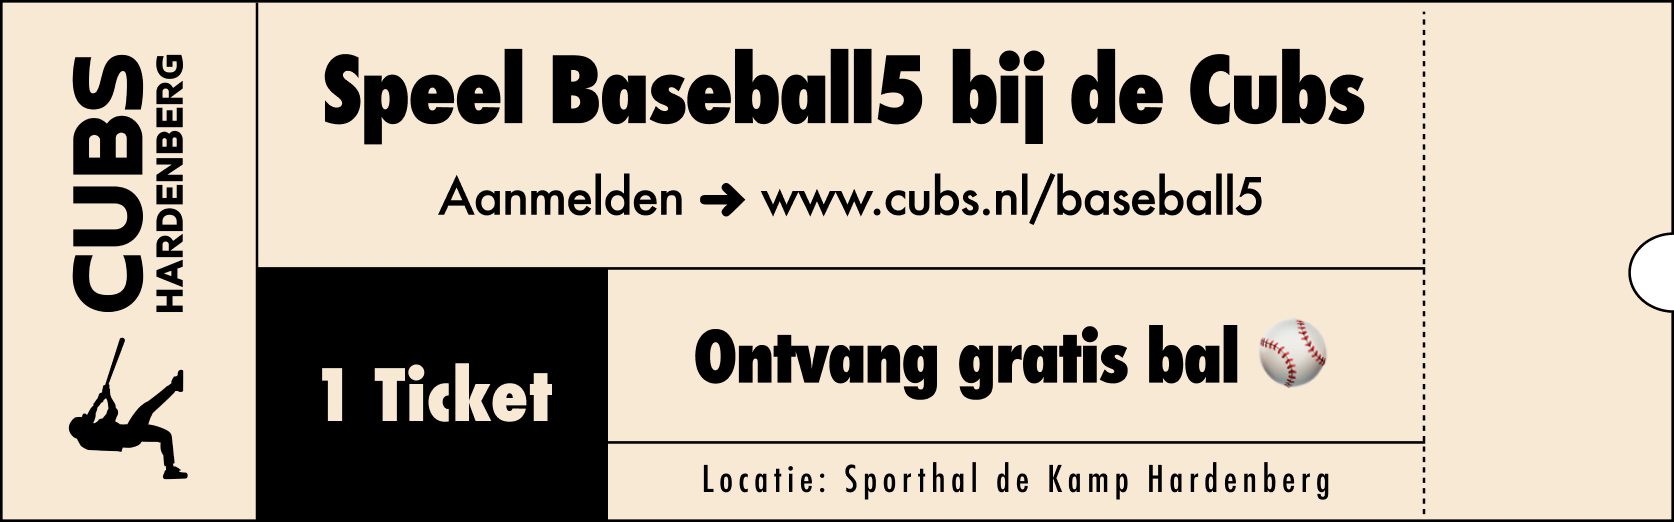 ticket baseball5 cubs hardenberg